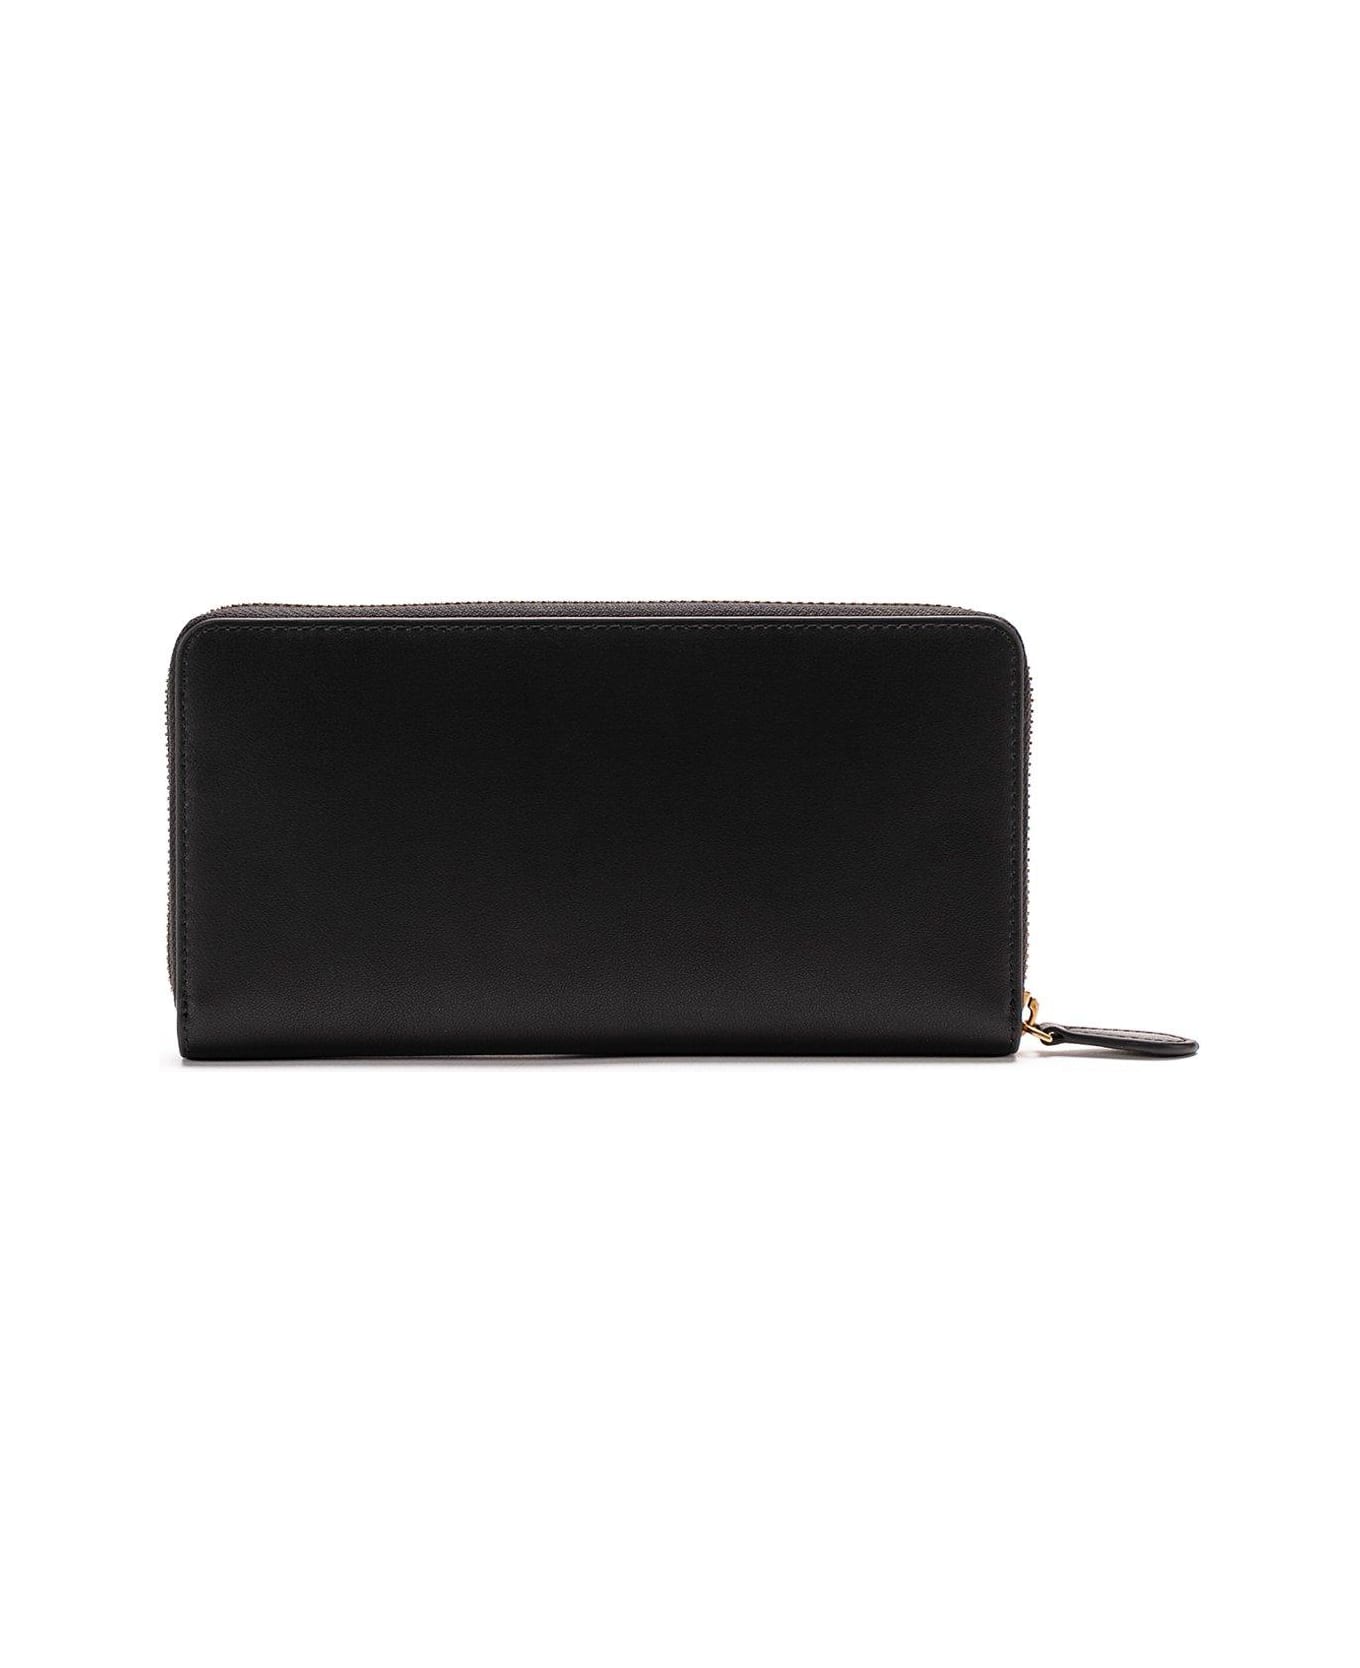 Pinko Ryder Leather Zip Around Wallet - Black 財布